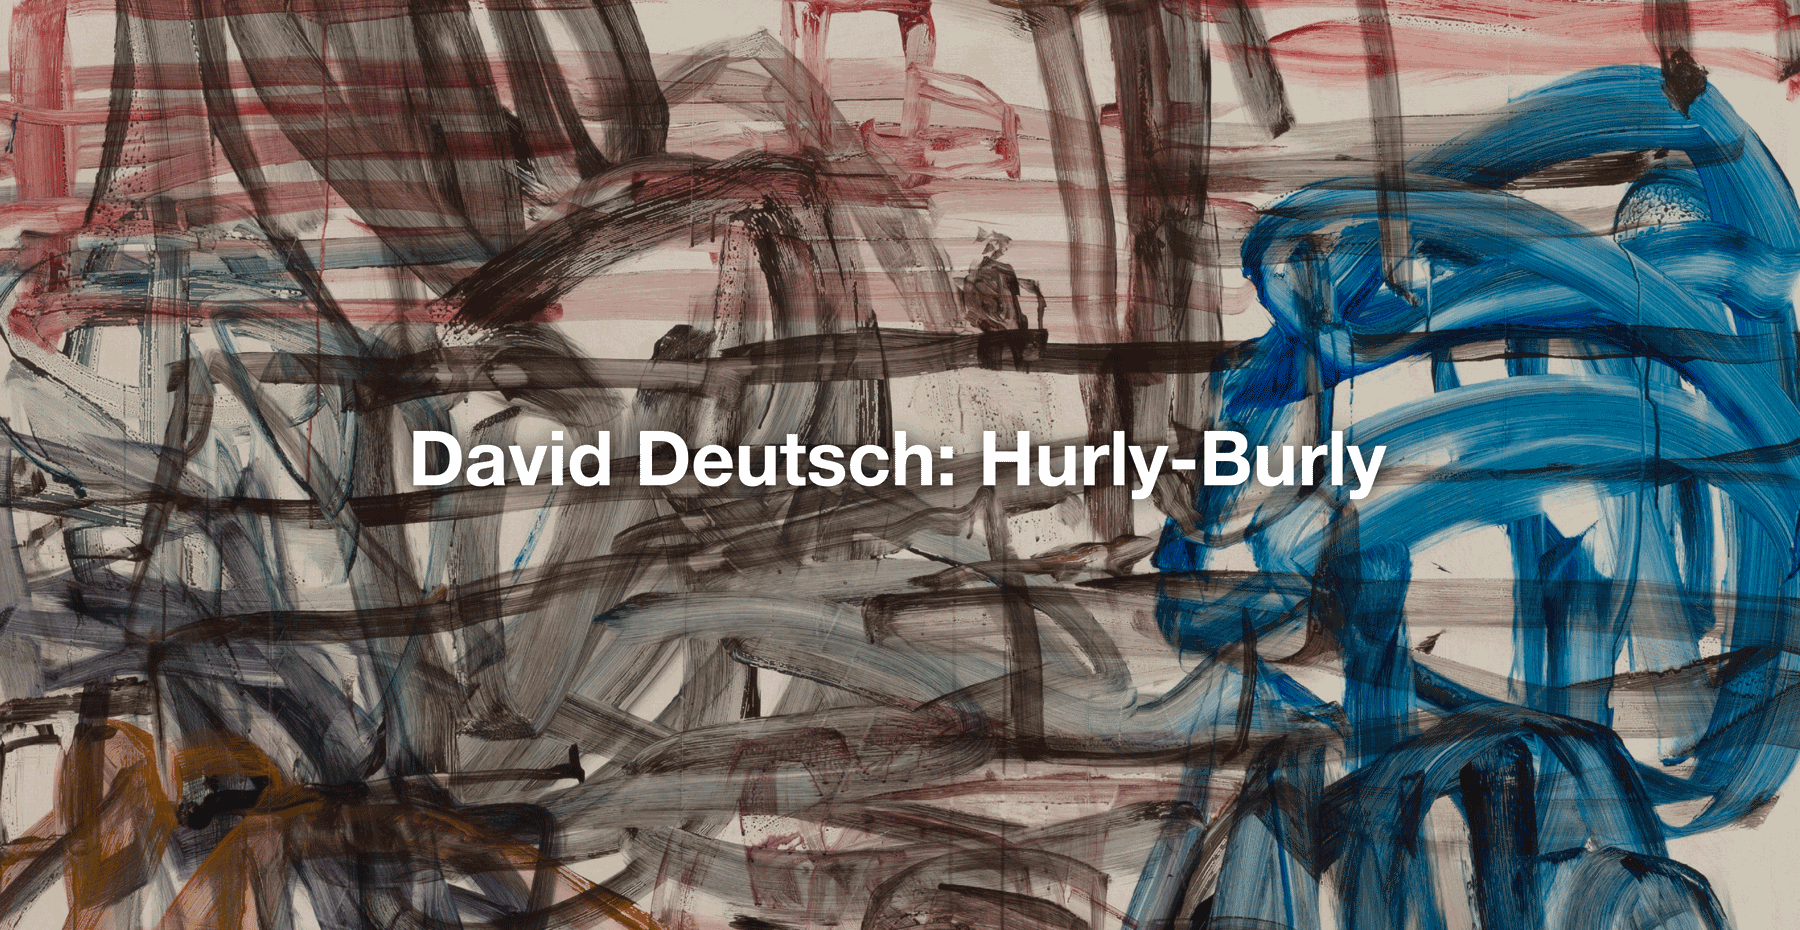 David Deutsch: Hurly-Burly
Two Part Exhibition with Eva Presenhuber
January 11 - February 7, 2023
39 + 55 Great Jones Street

Image Link